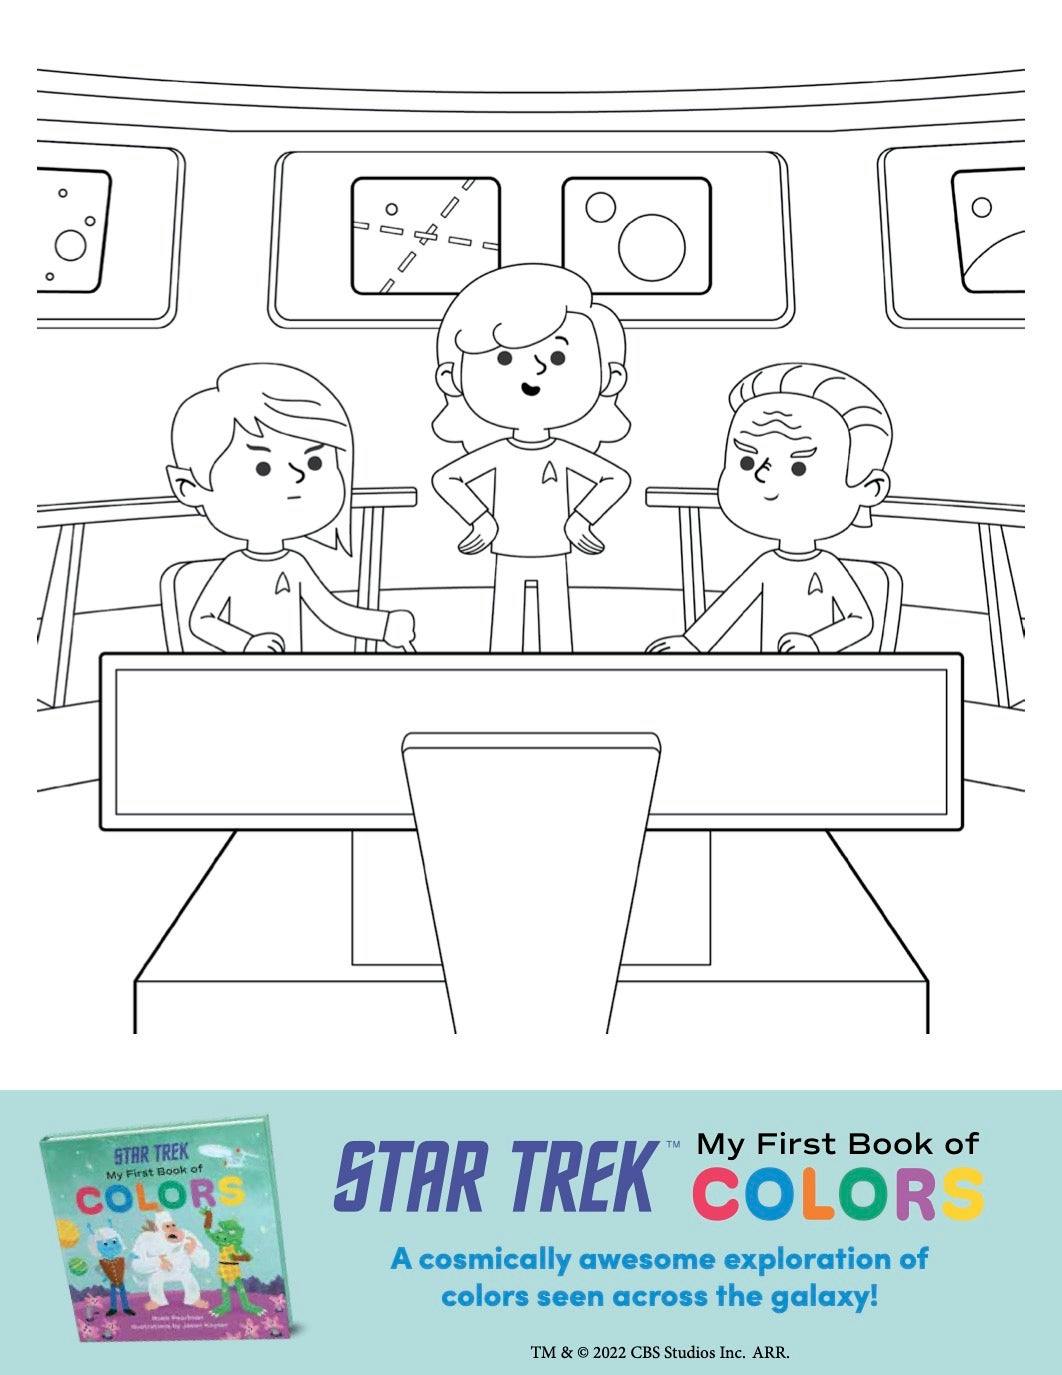 Star Trek Board Book Coloring Page